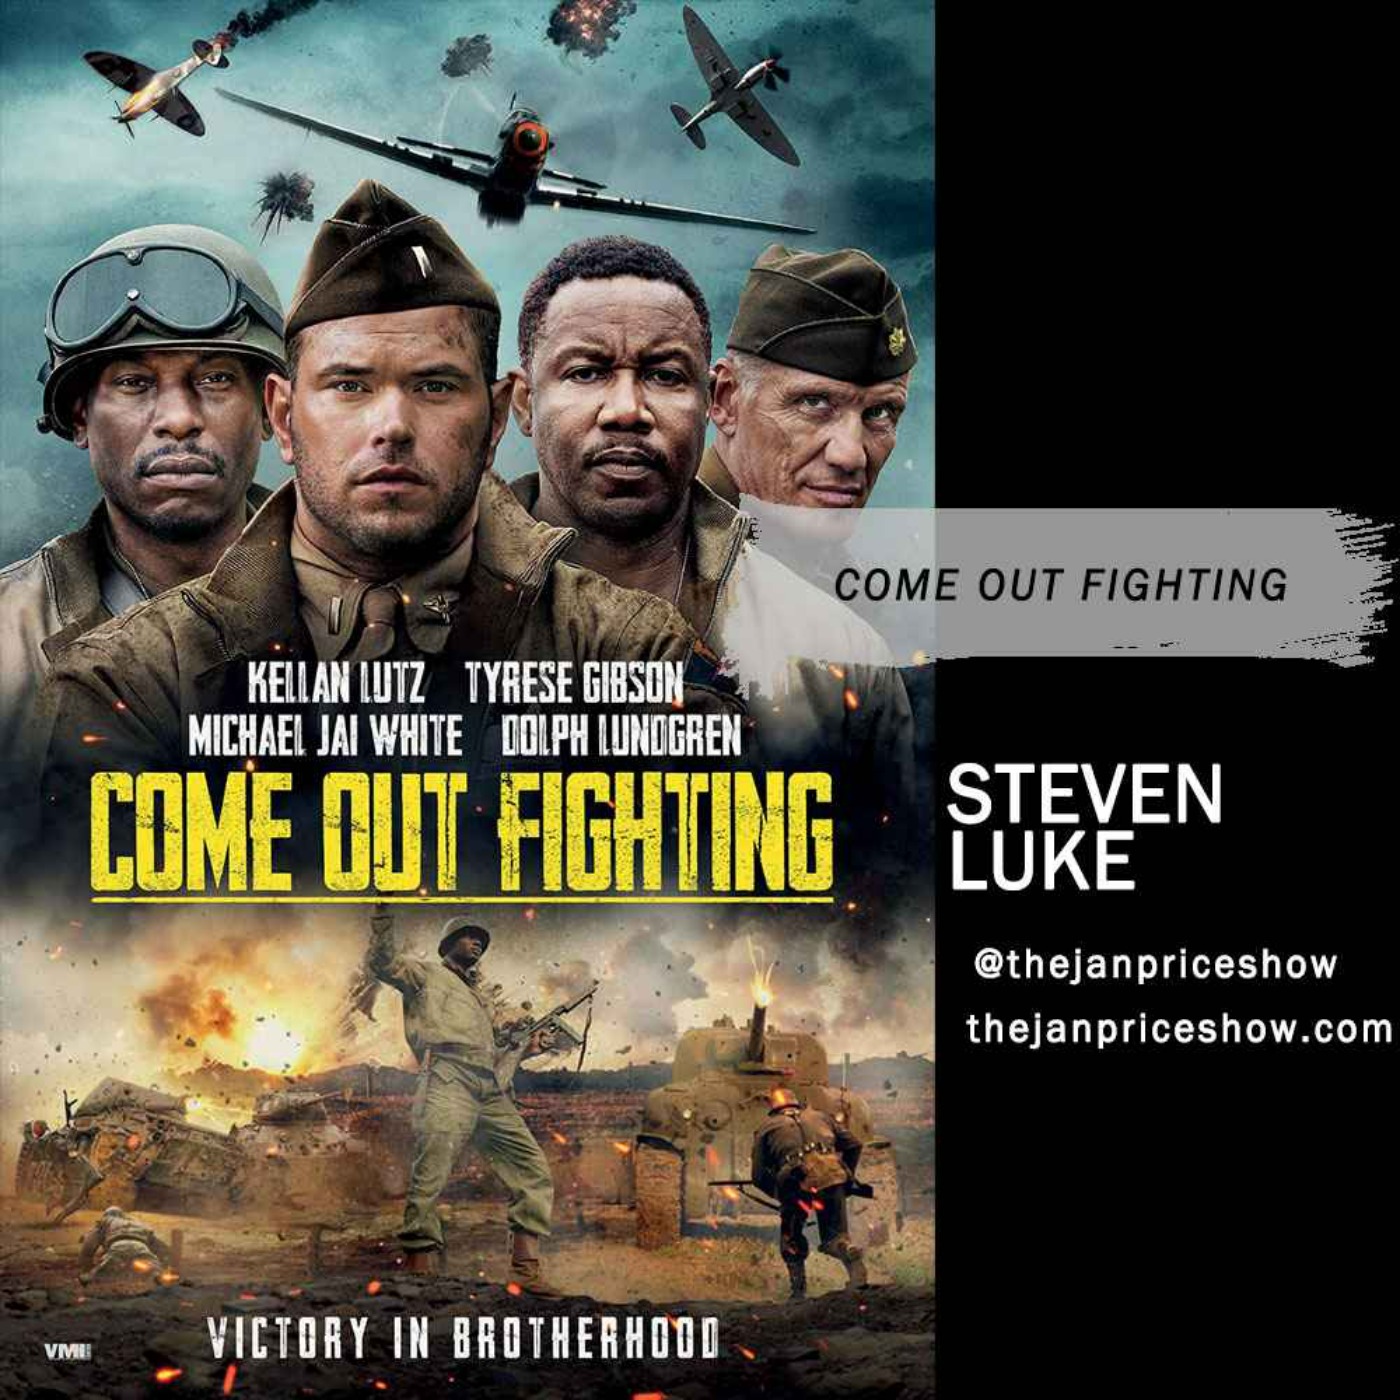 Steven Luke - Come Out Fighting